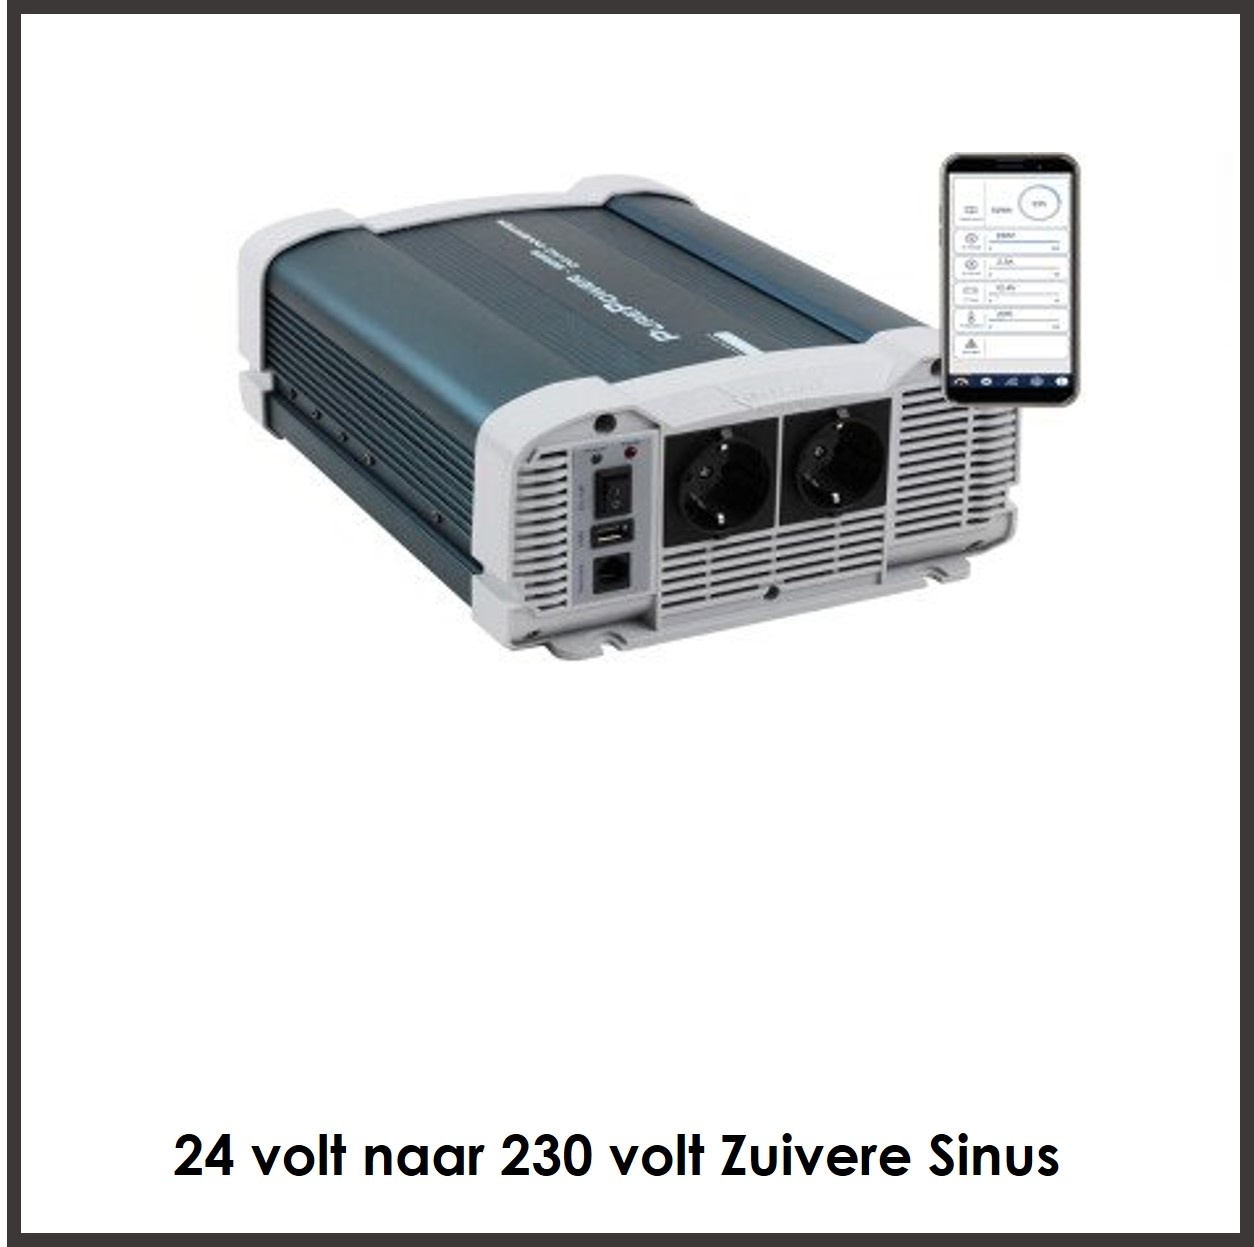 Zuivere Sinus Omvormers 24V naar 230V - PurePower